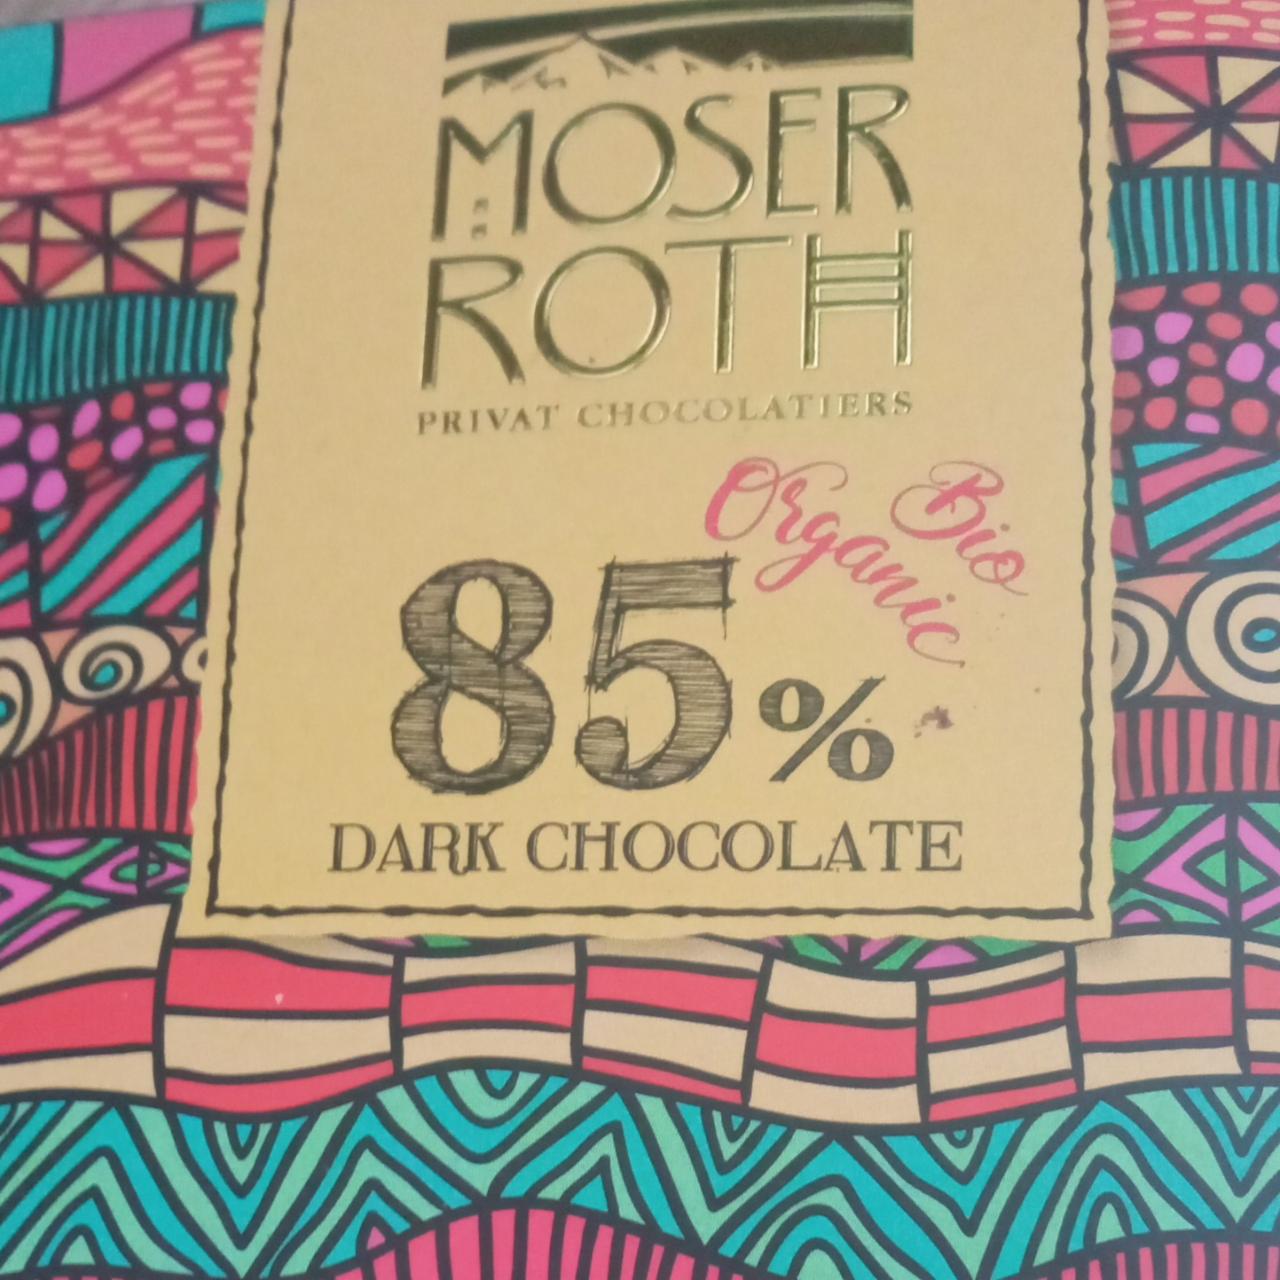 Fotografie - Bio Dark Chocolate 85% Moser Roth